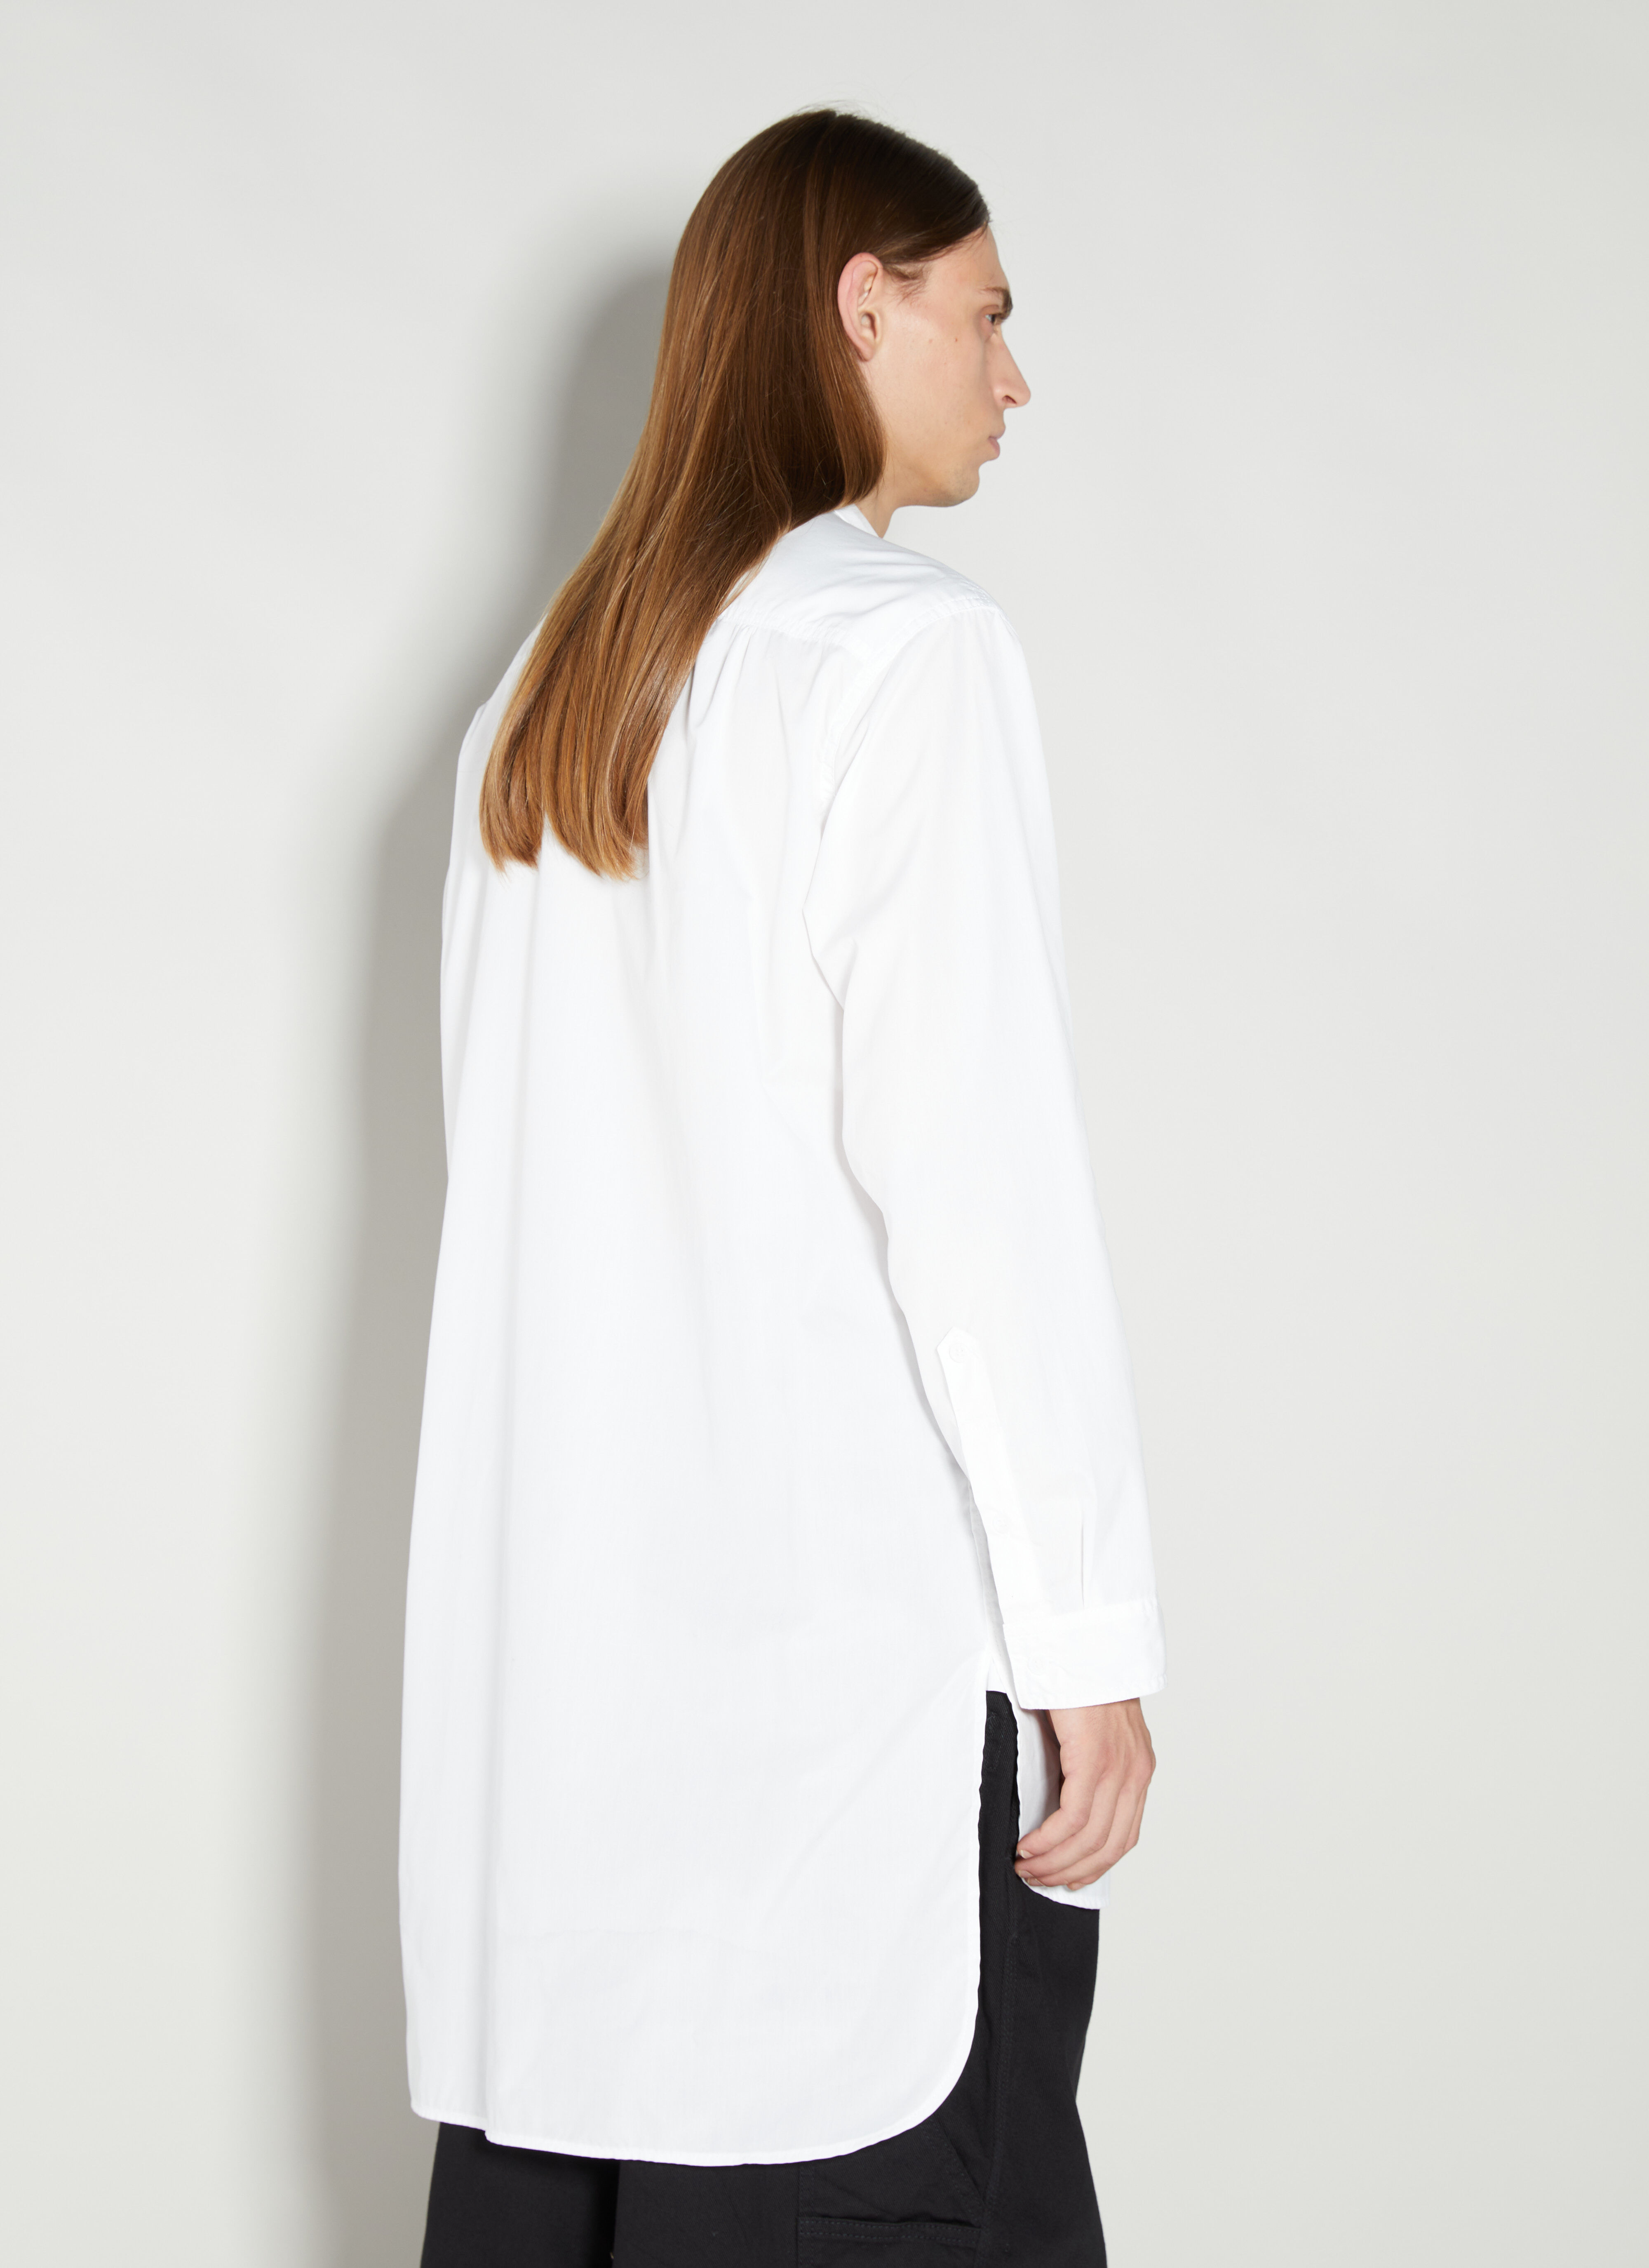 Yohji Yamamoto Men's Triple Collar Long Shirt in White | LN-CC®